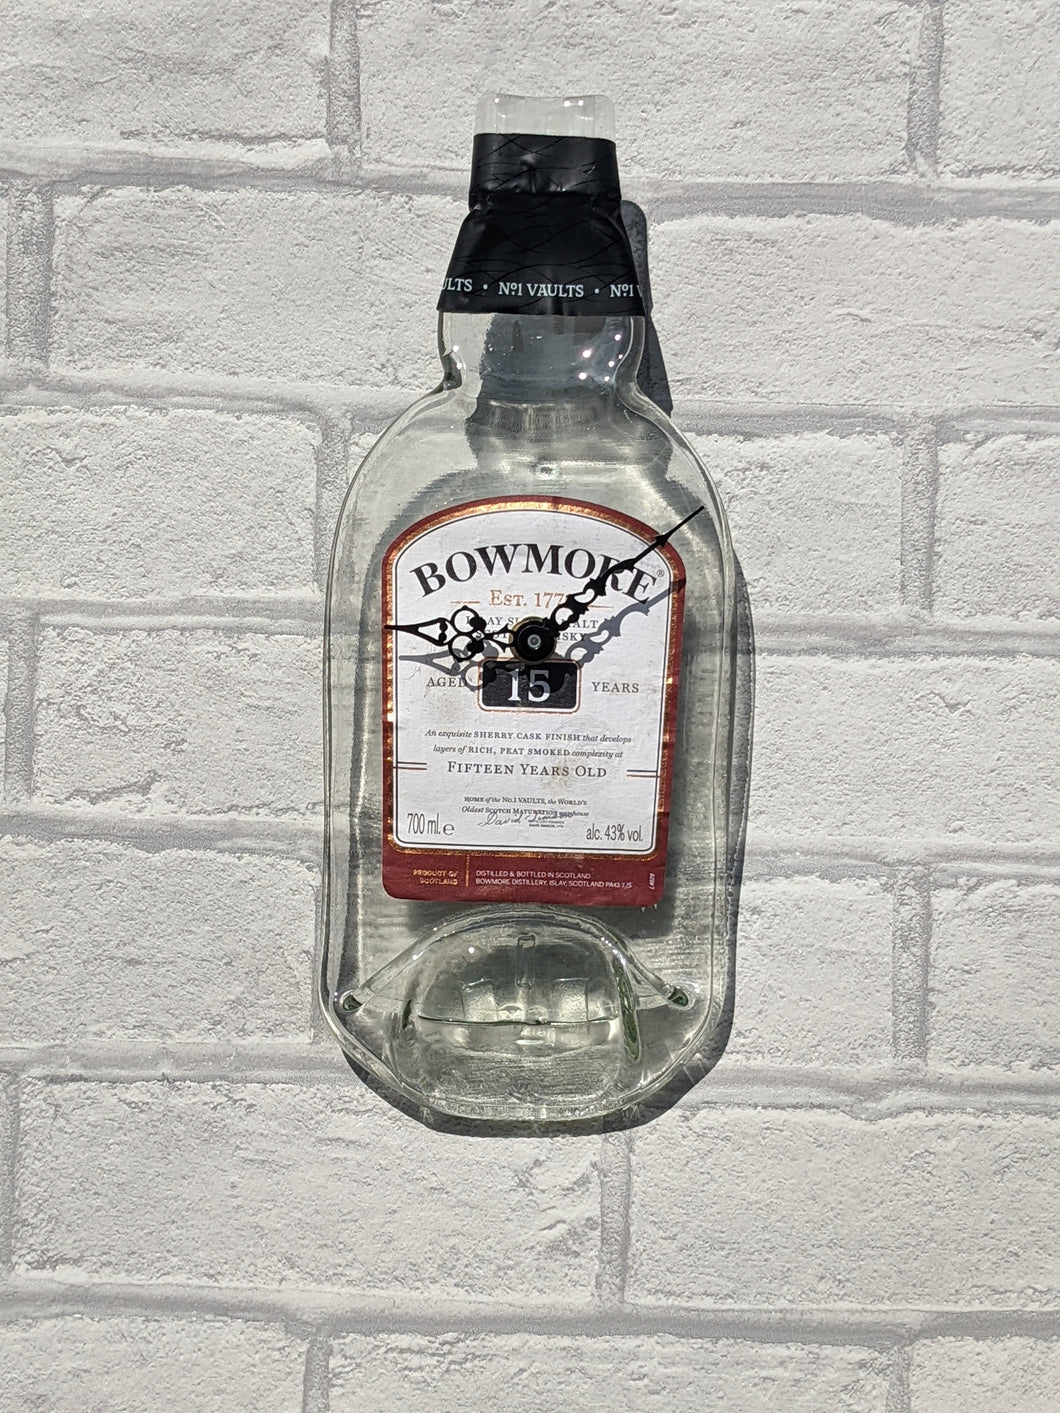 Bowmore whisky bottle clock